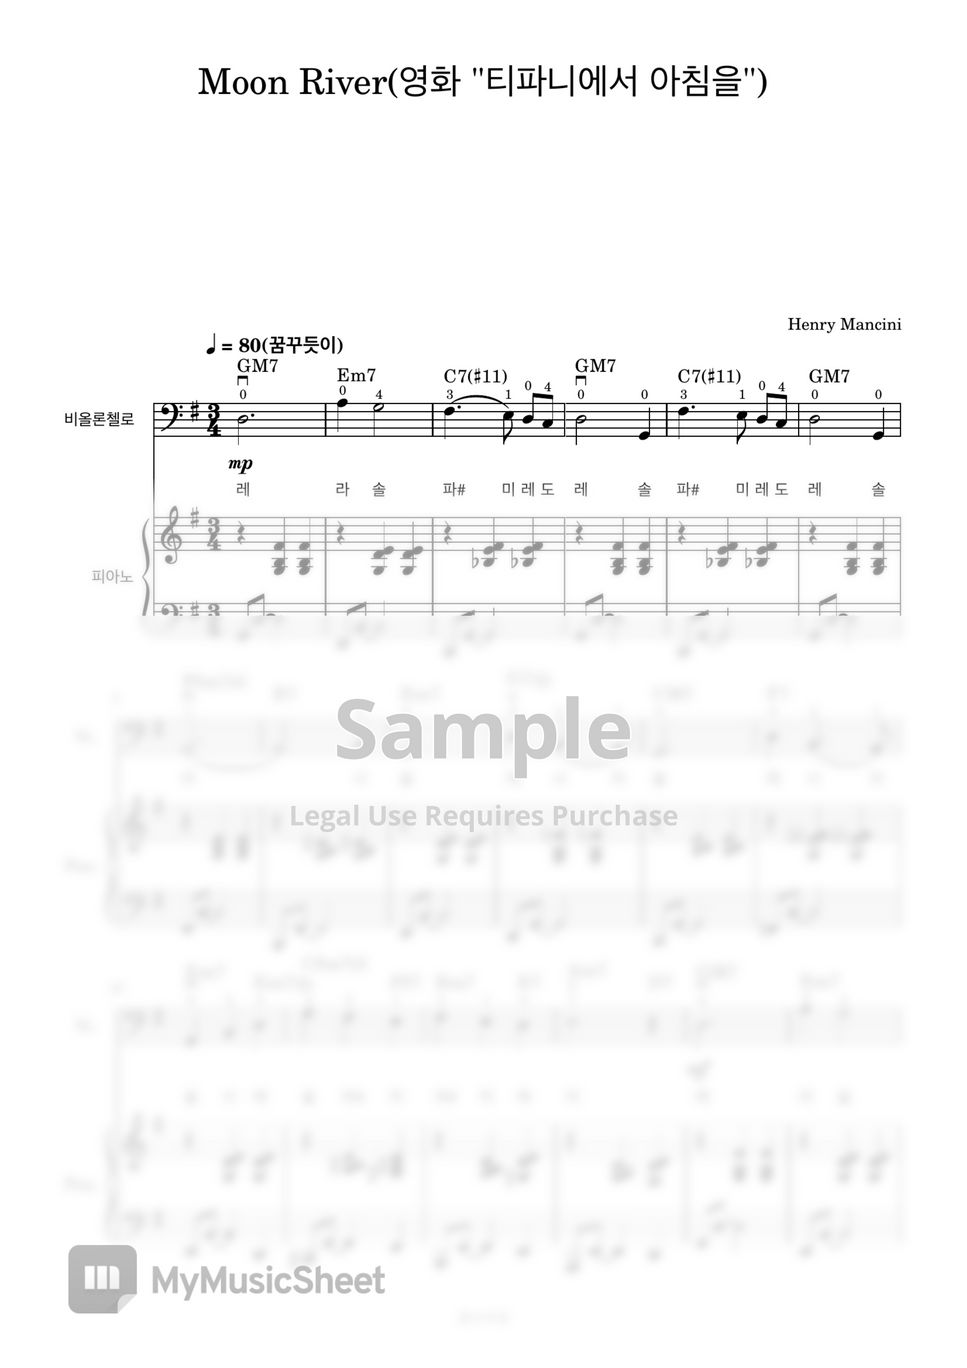 Henry Mancini - Moon River (첼로+피아노, 계이름 & 손가락 번호 포함) by 첼로마을